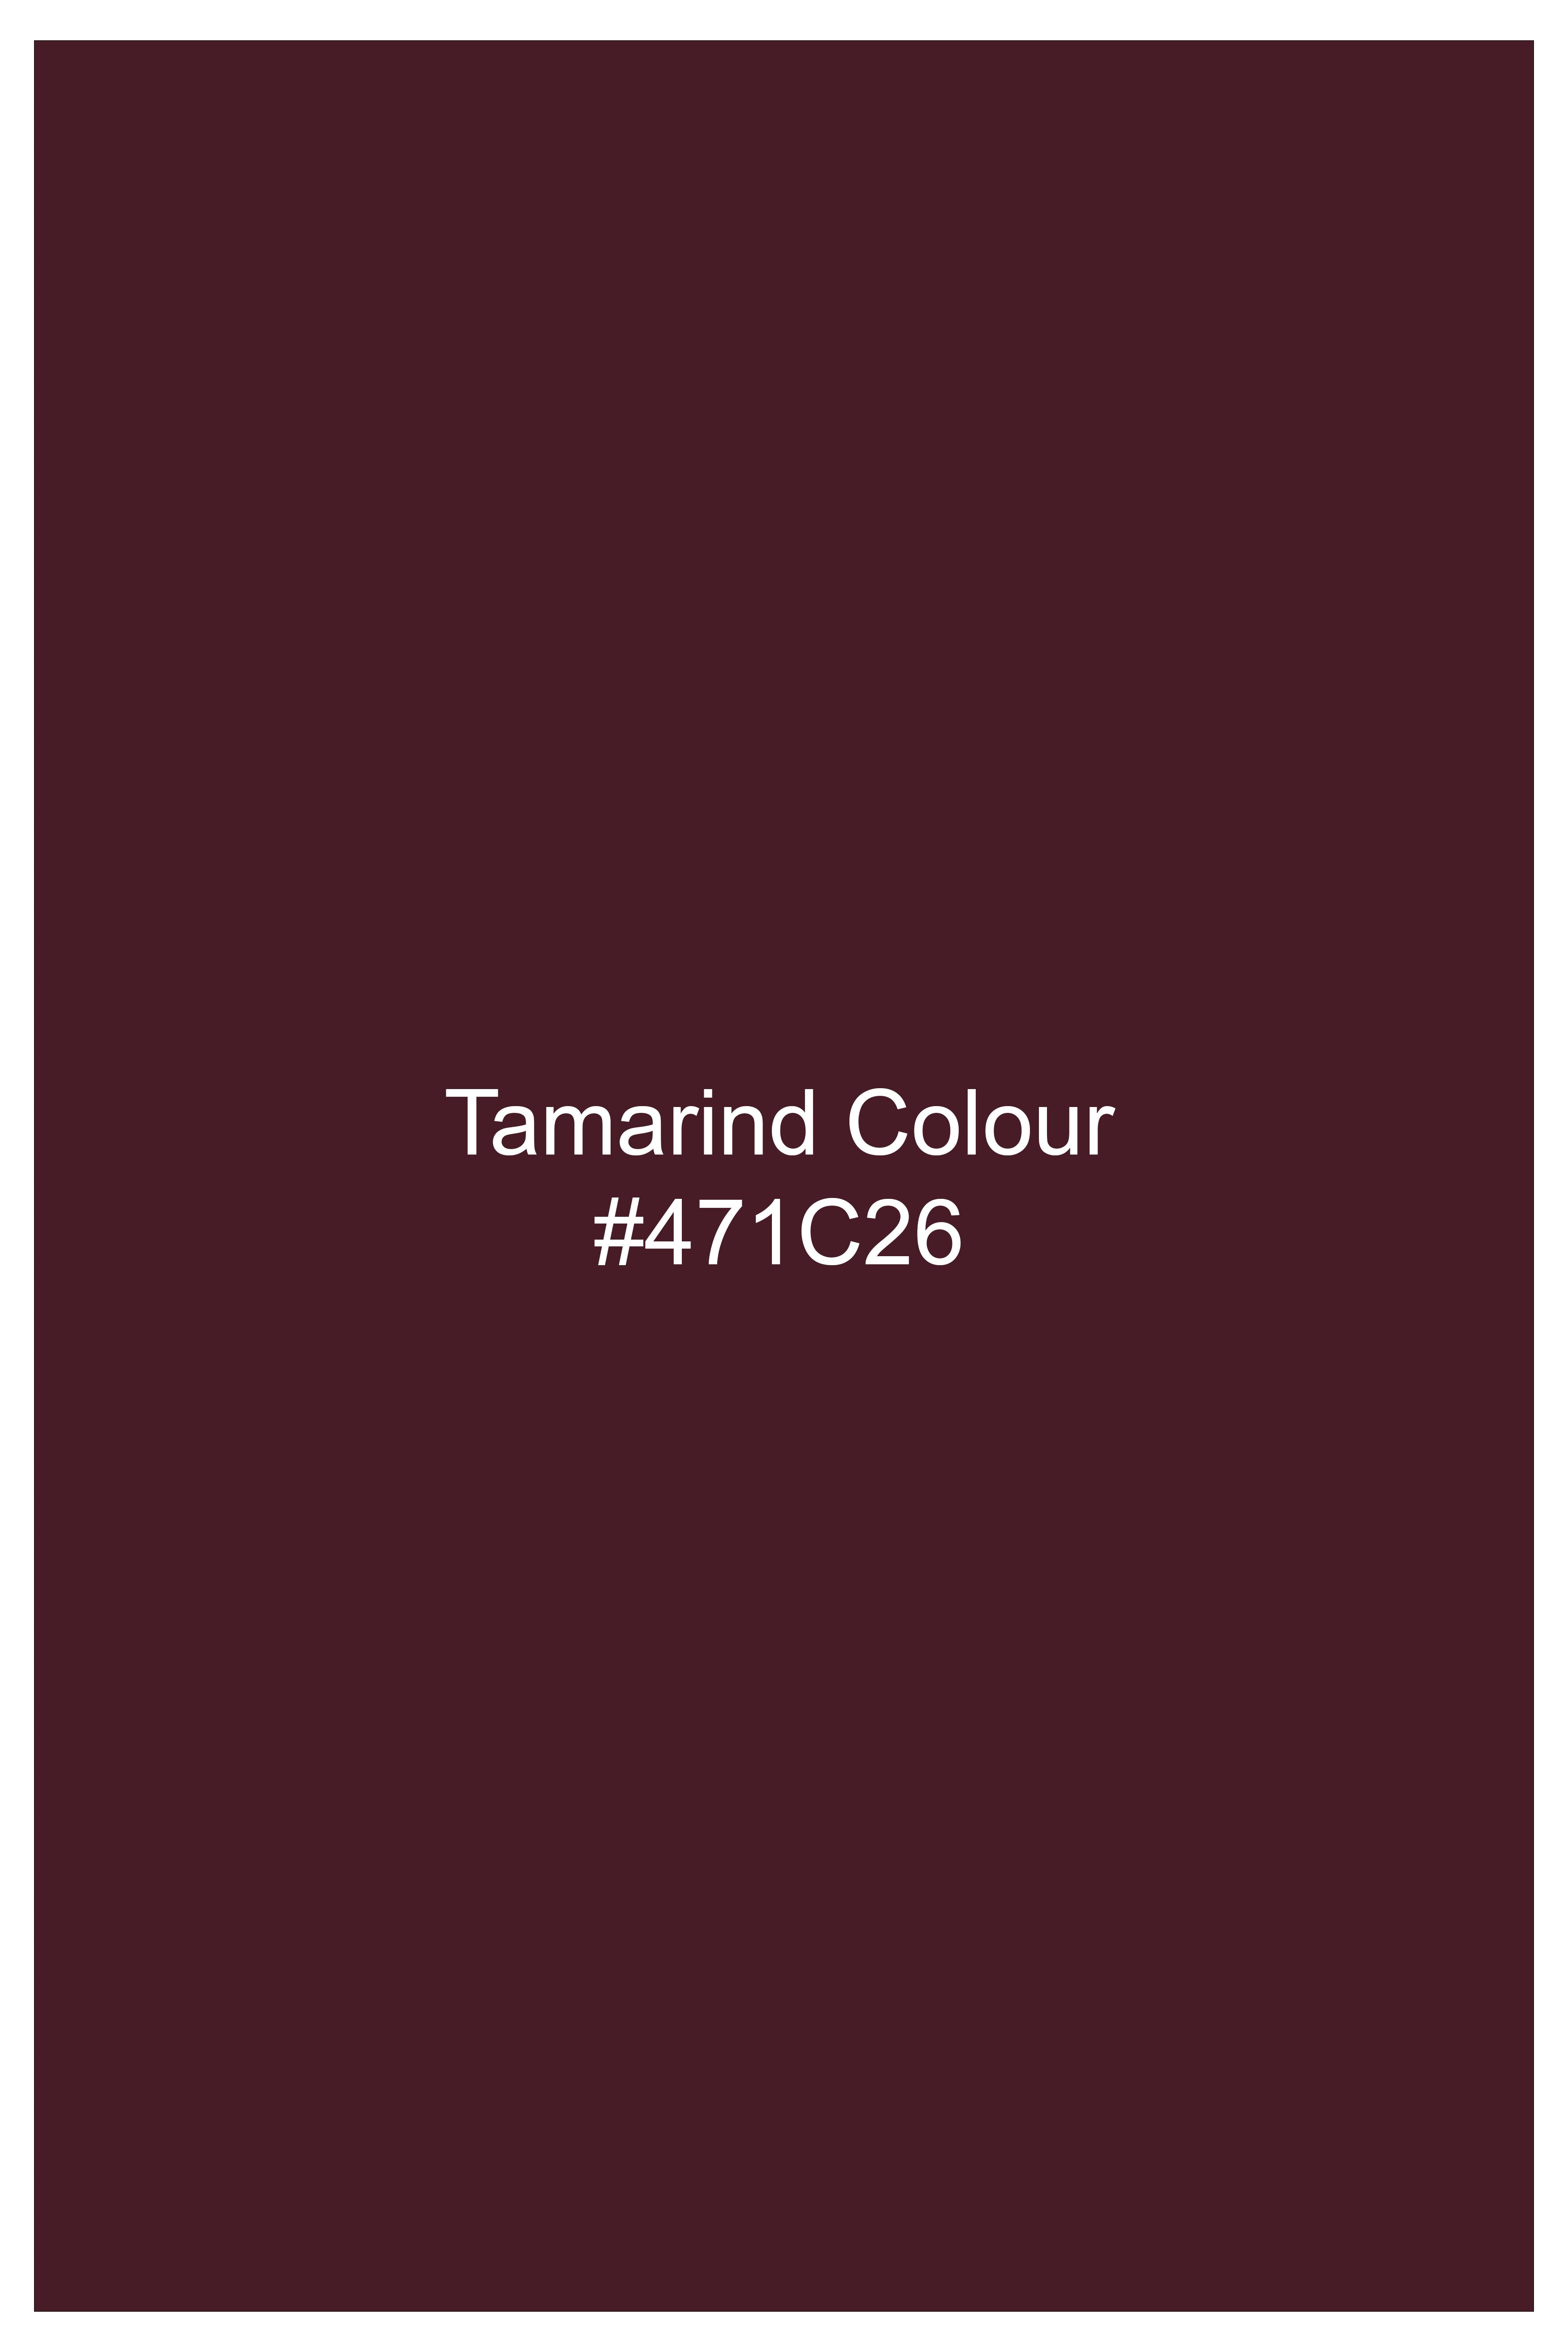 Tamarind Maroon Wool Blend Double Breasted Suit